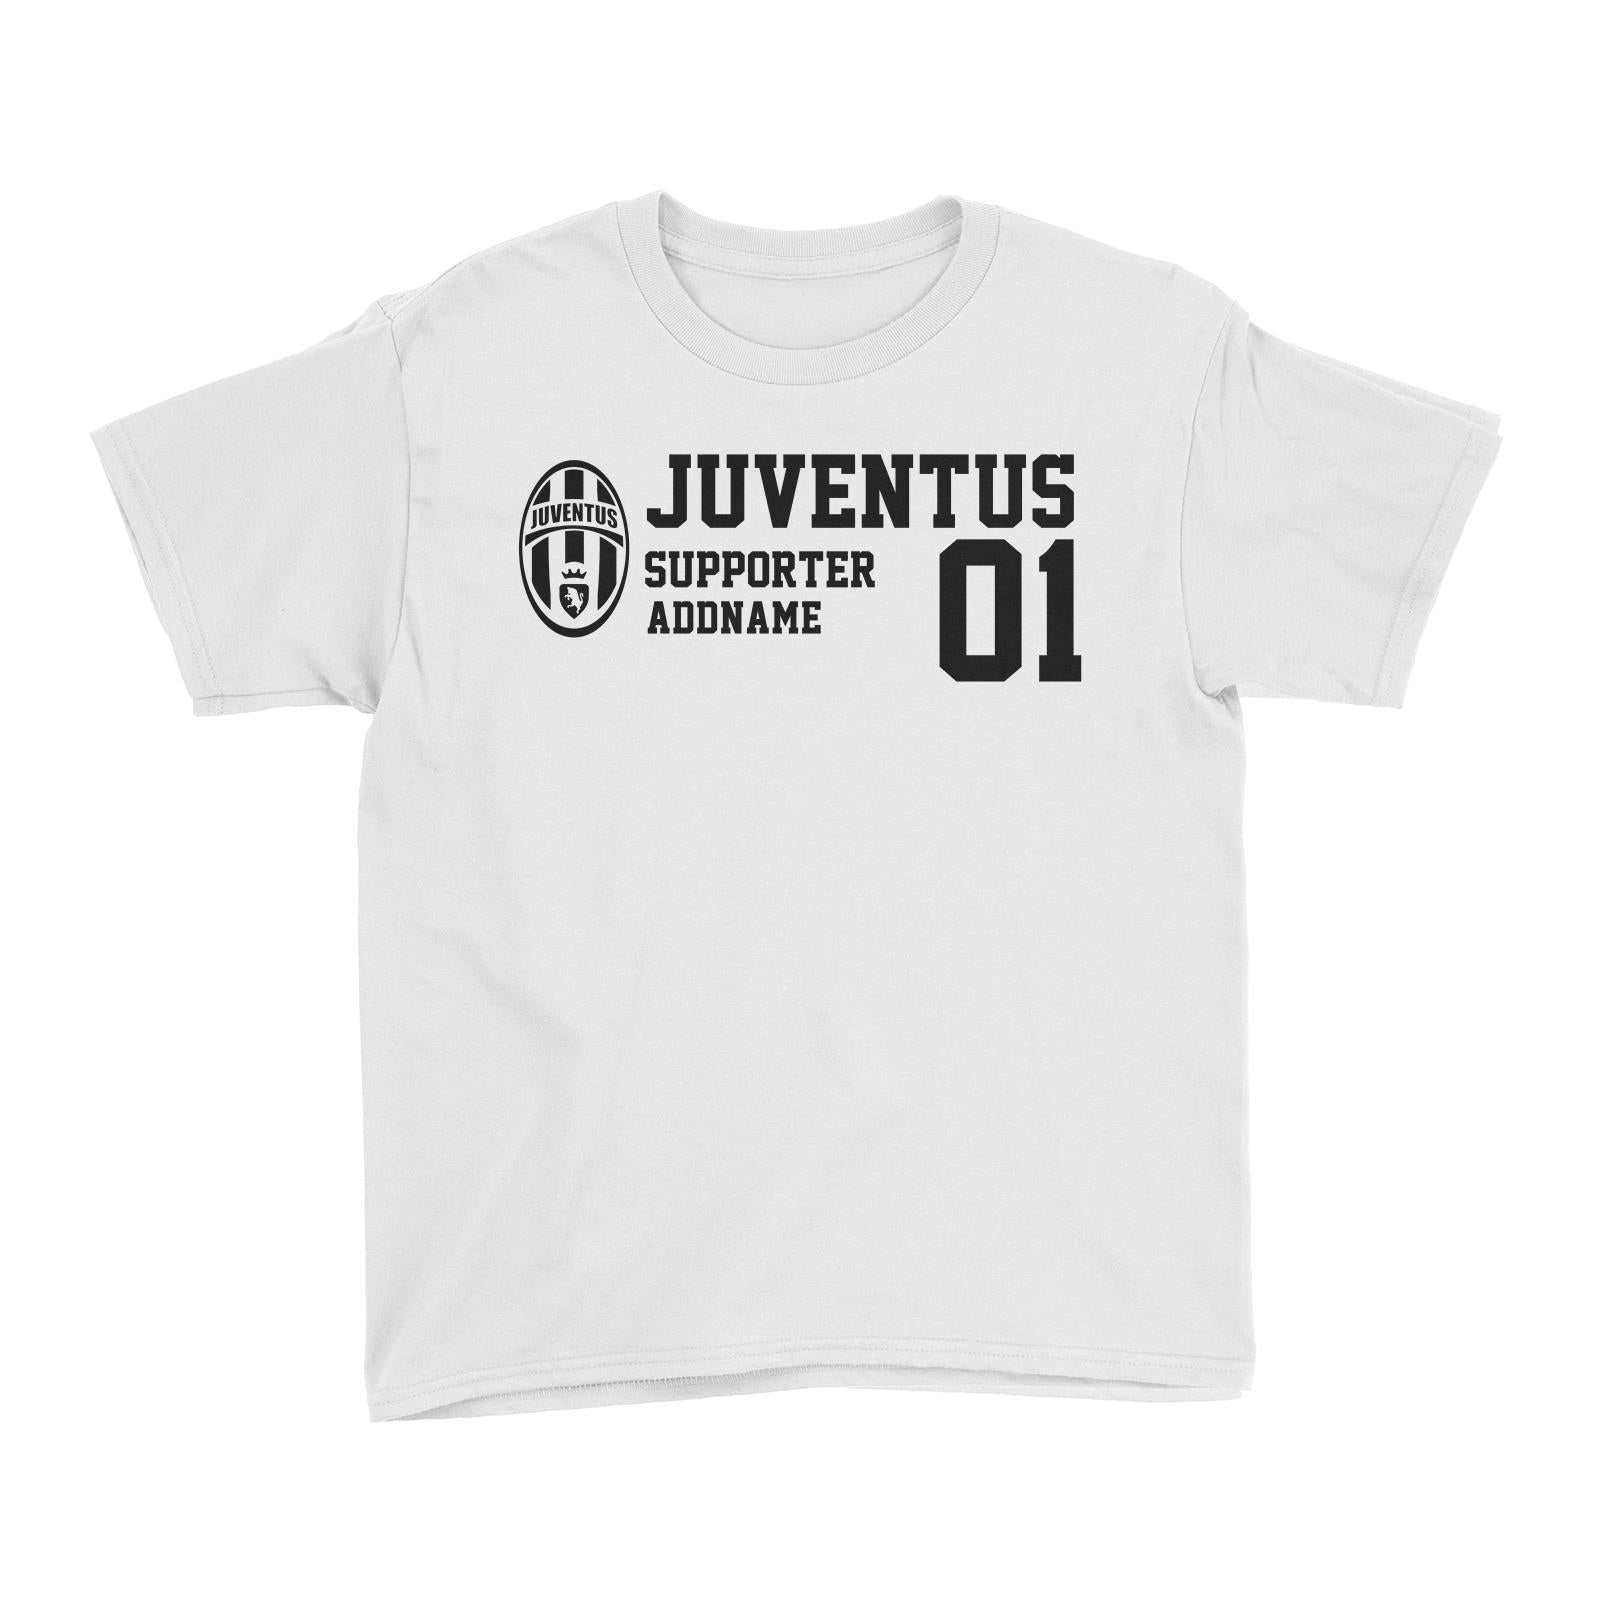 Juventus Football Supporter Addname Kid's T-Shirt